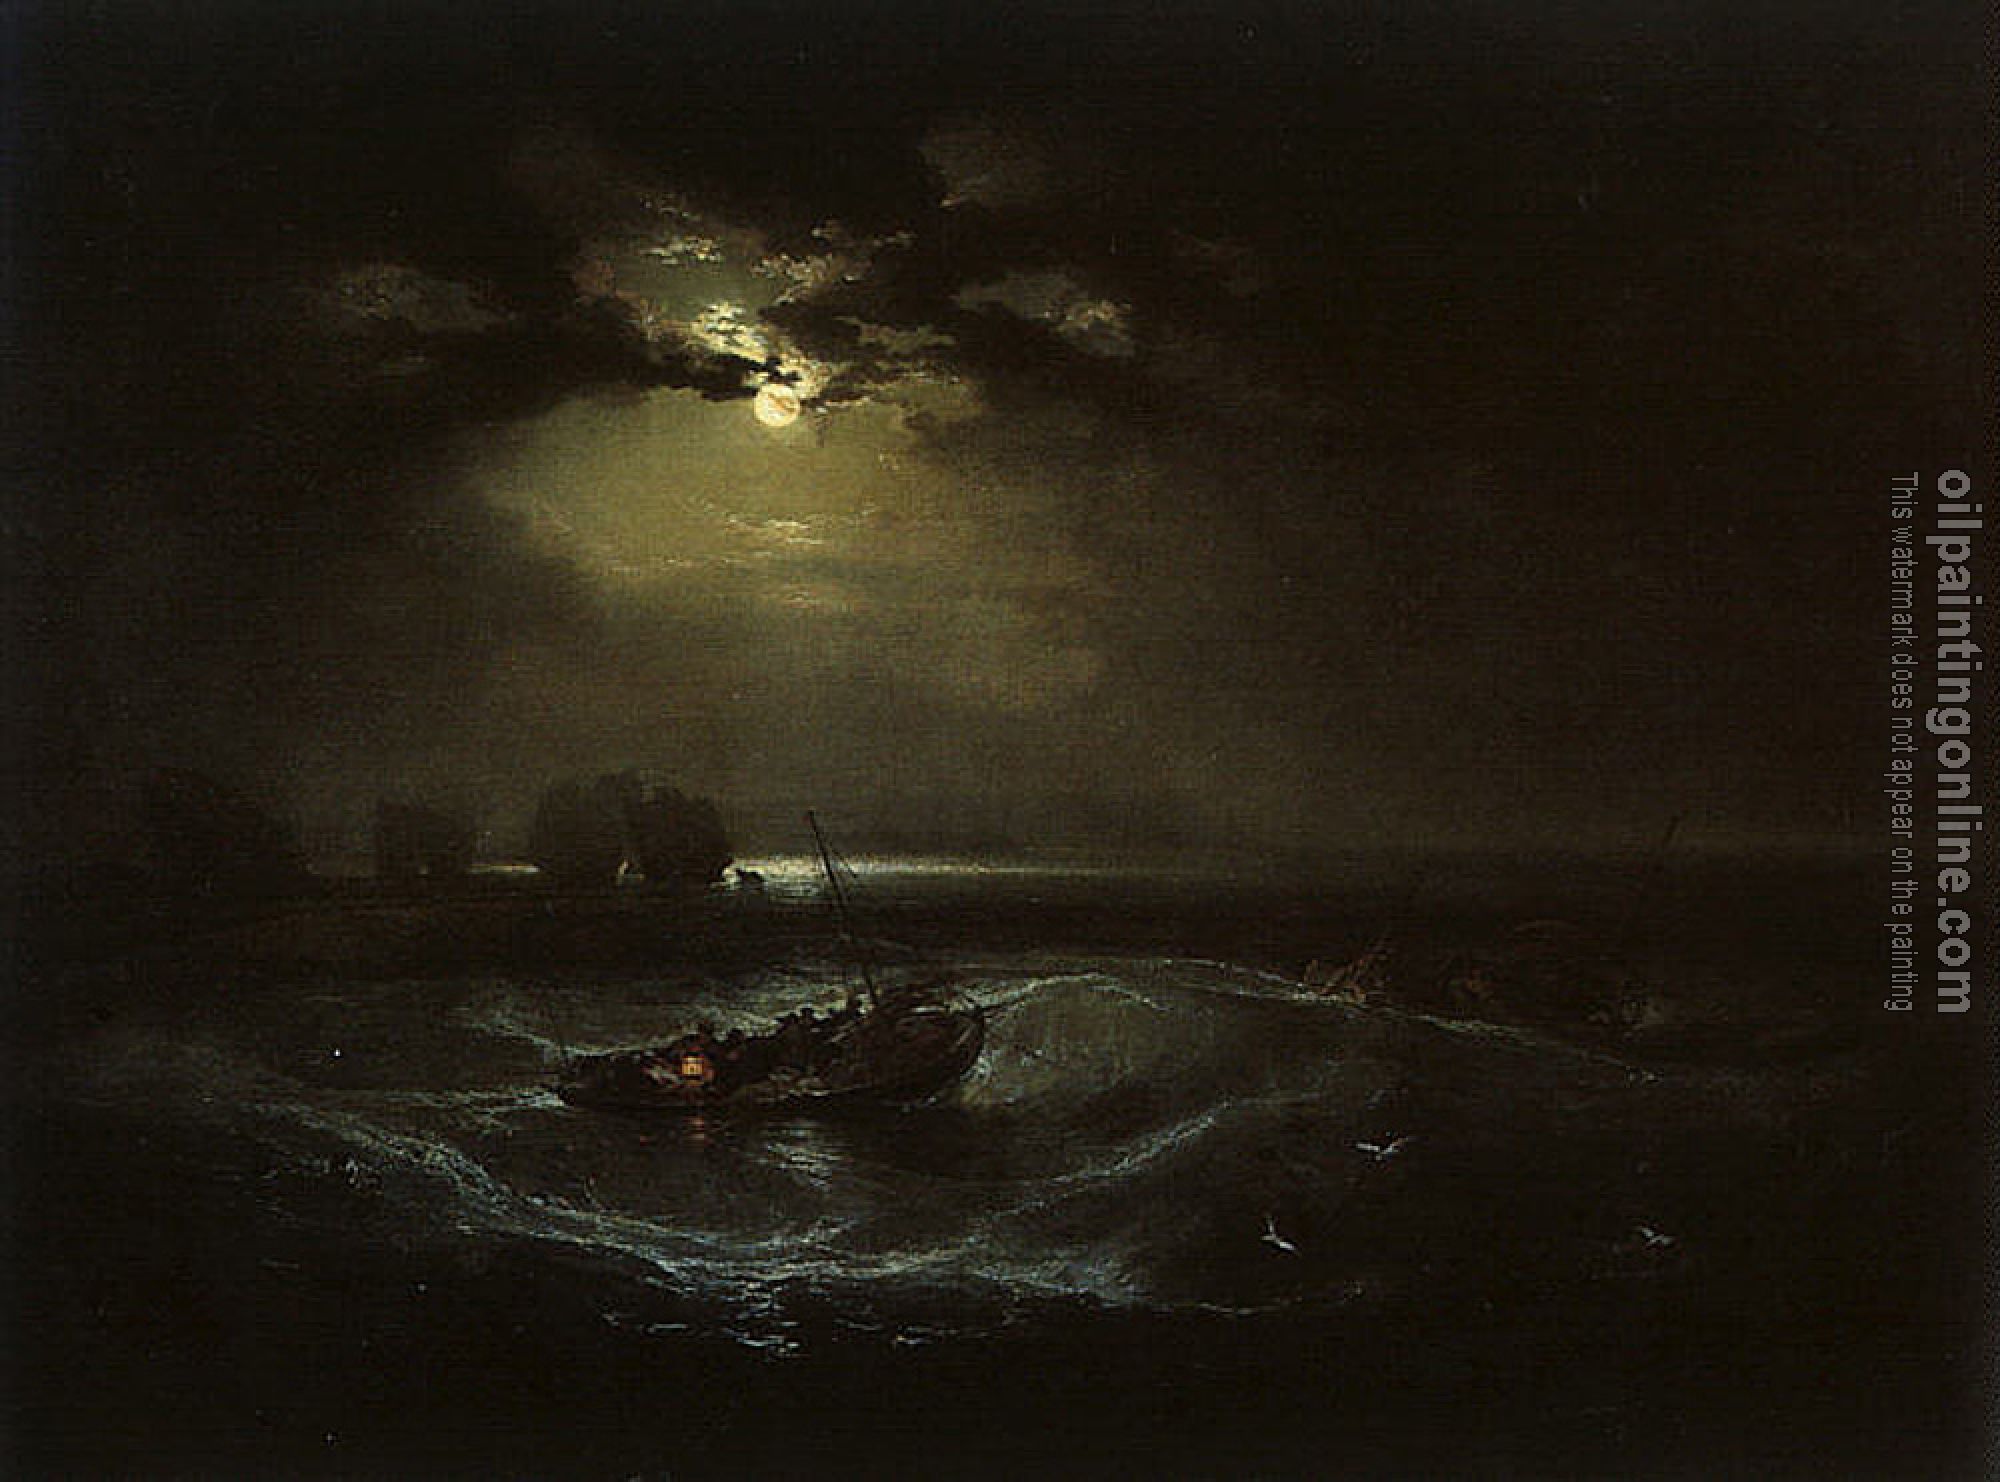 Turner, Joseph Mallord William - Fishermen at Sea